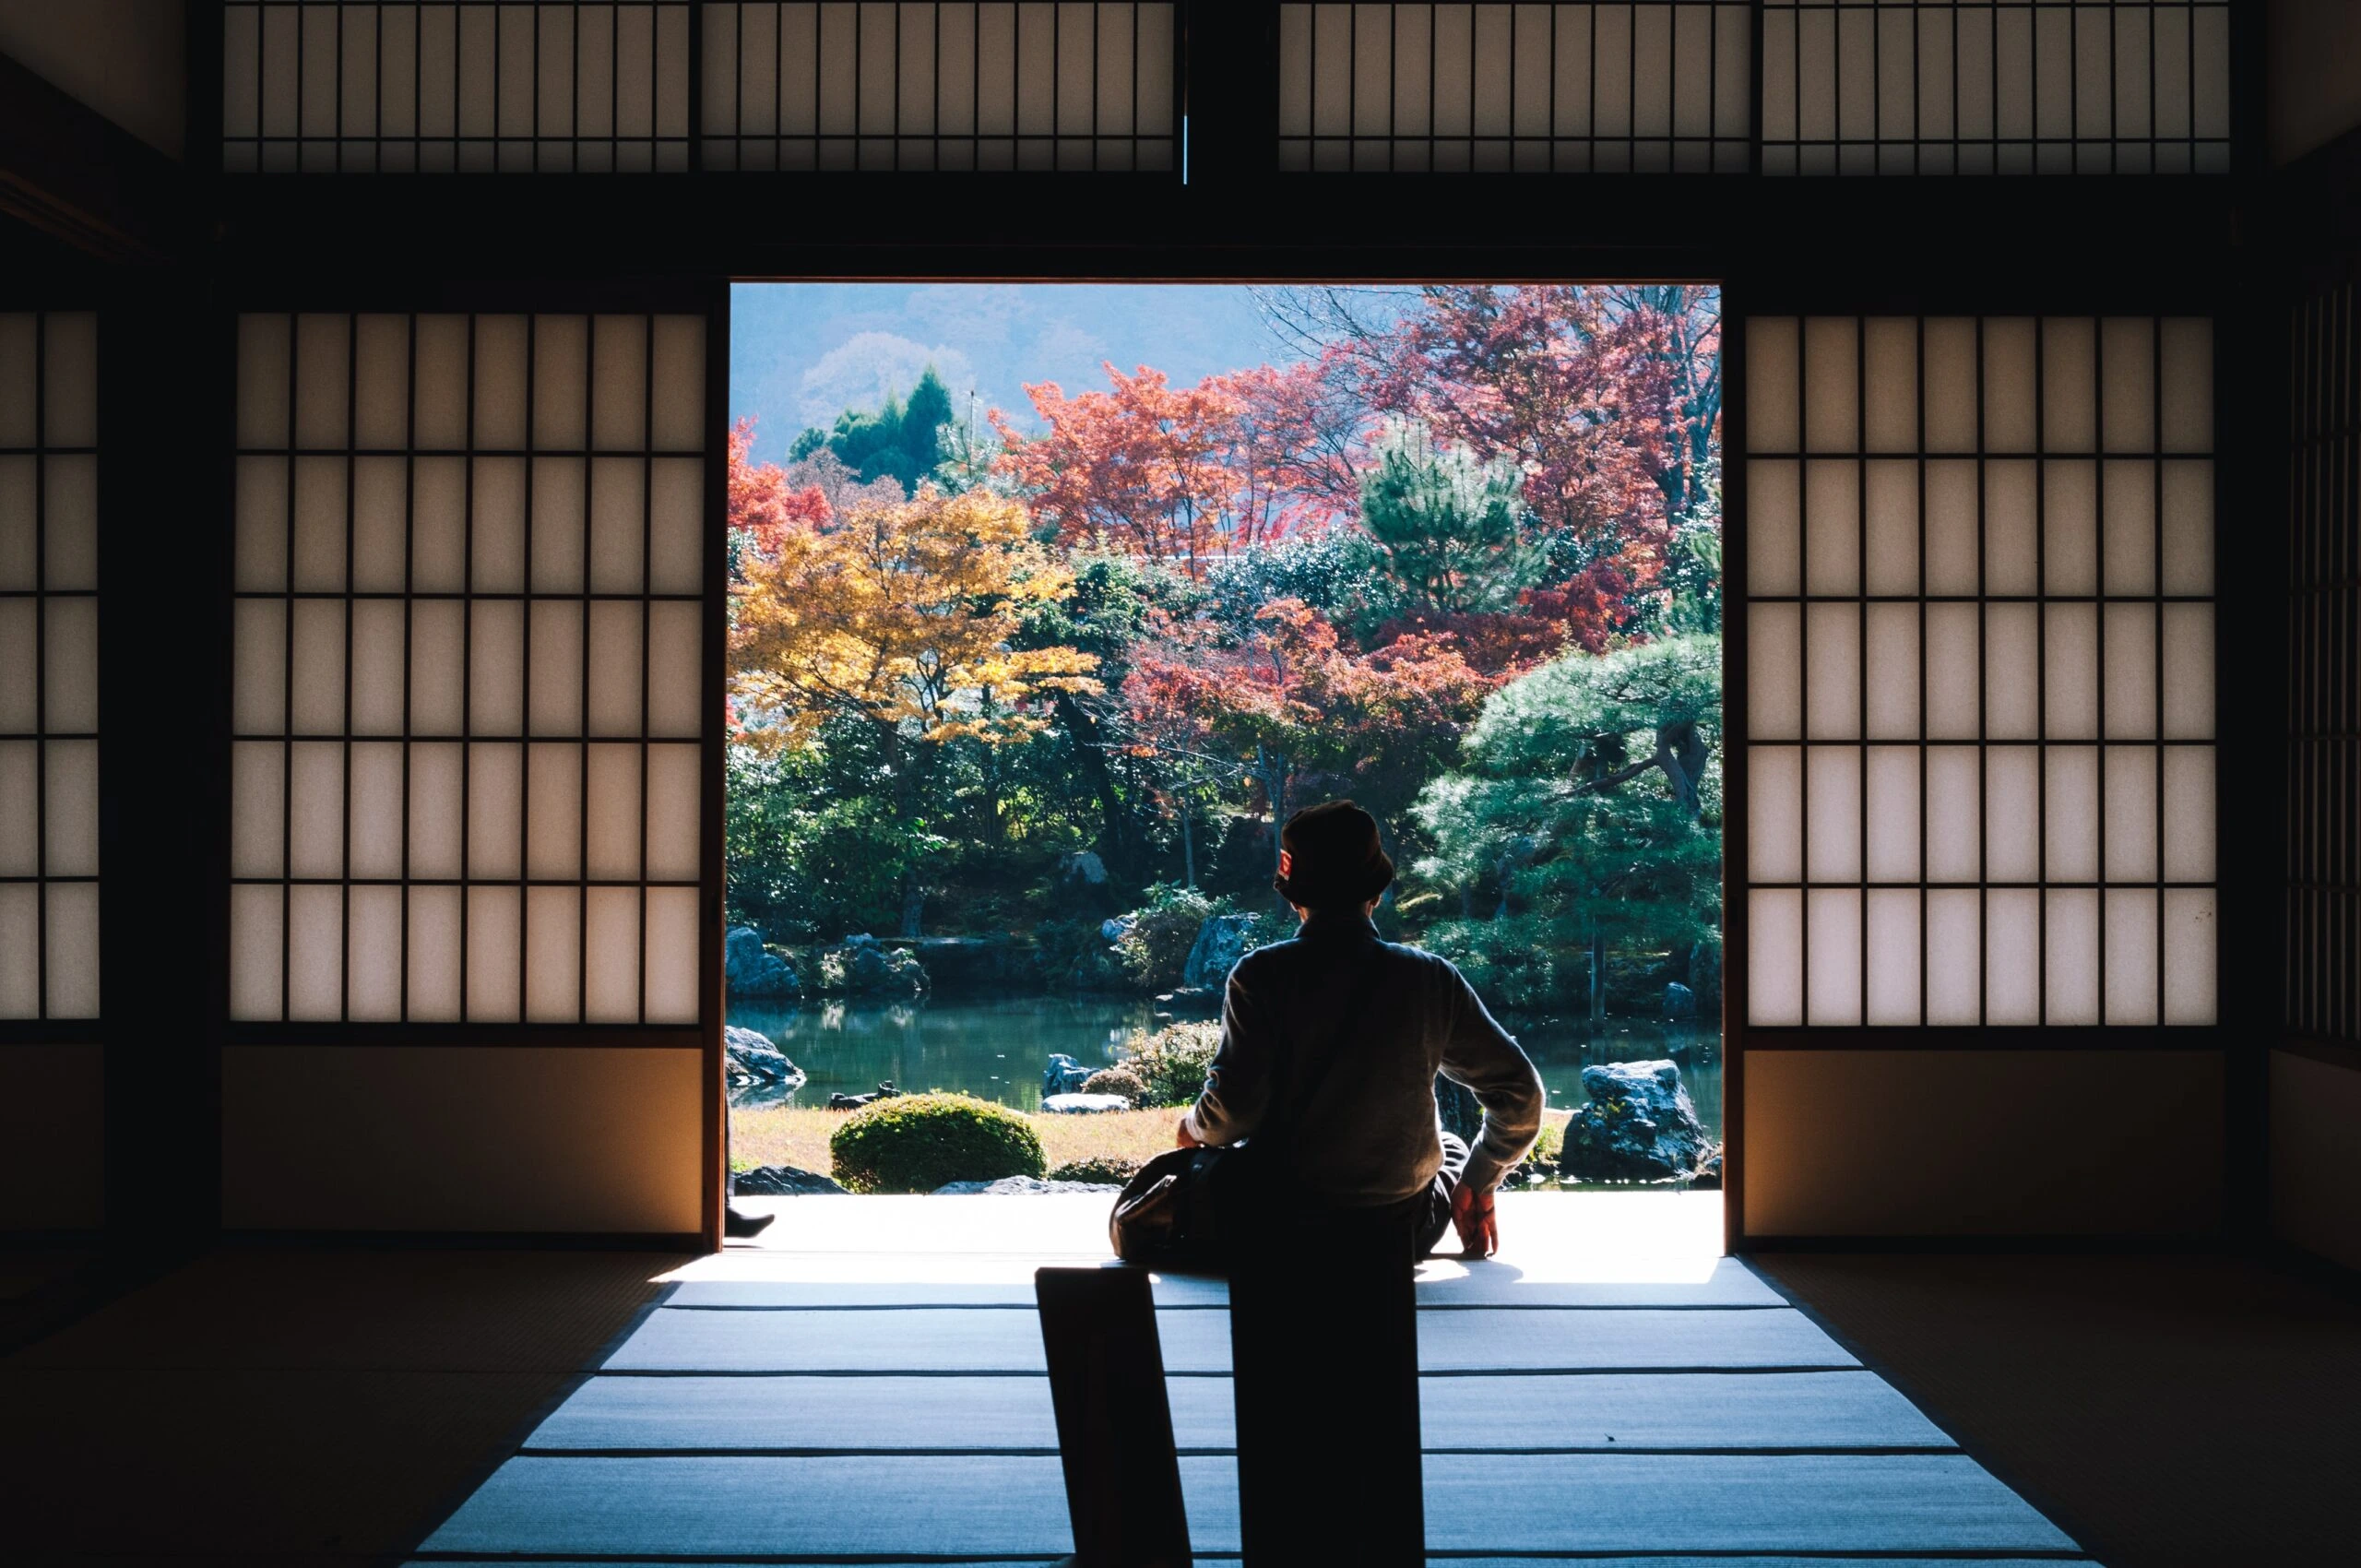 masaaki-komori-Gentleman sitting in Tea house looking out over pond-unsplash